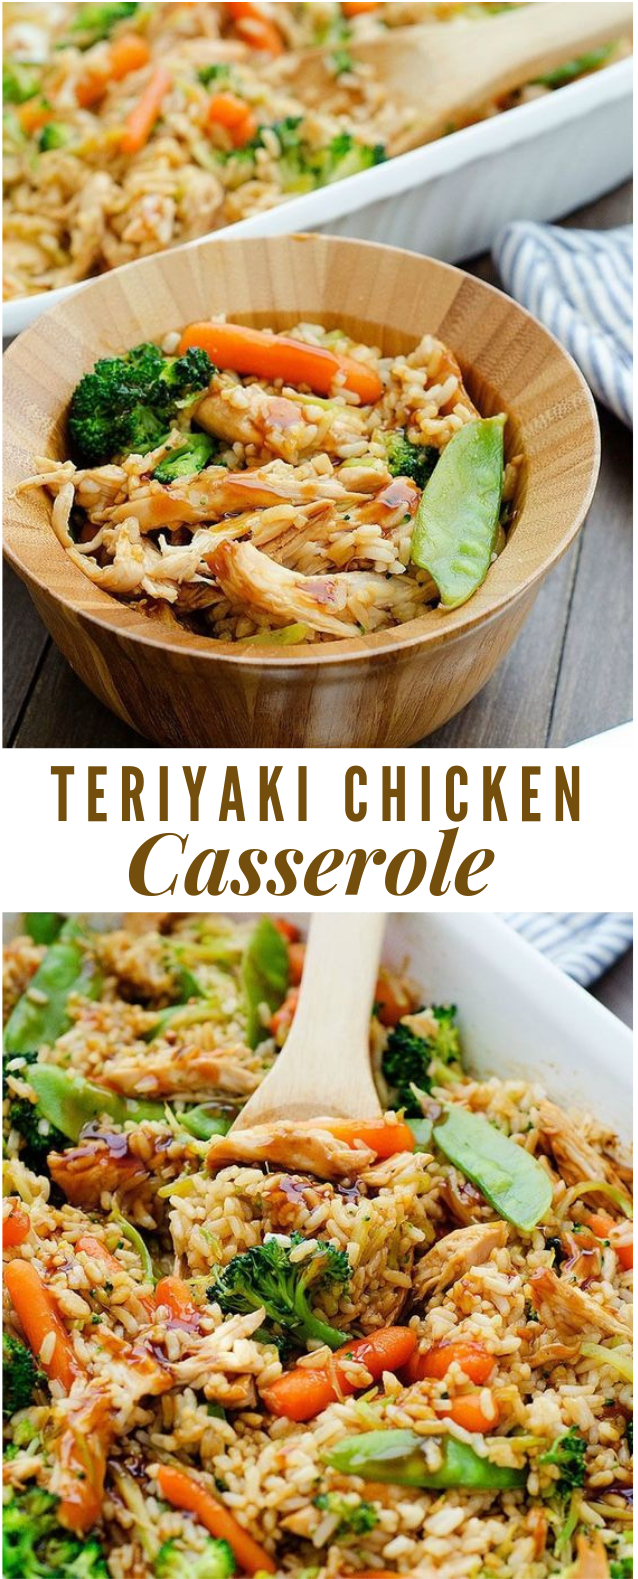 Teriyaki Chicken Casserole #Meal #Lunch